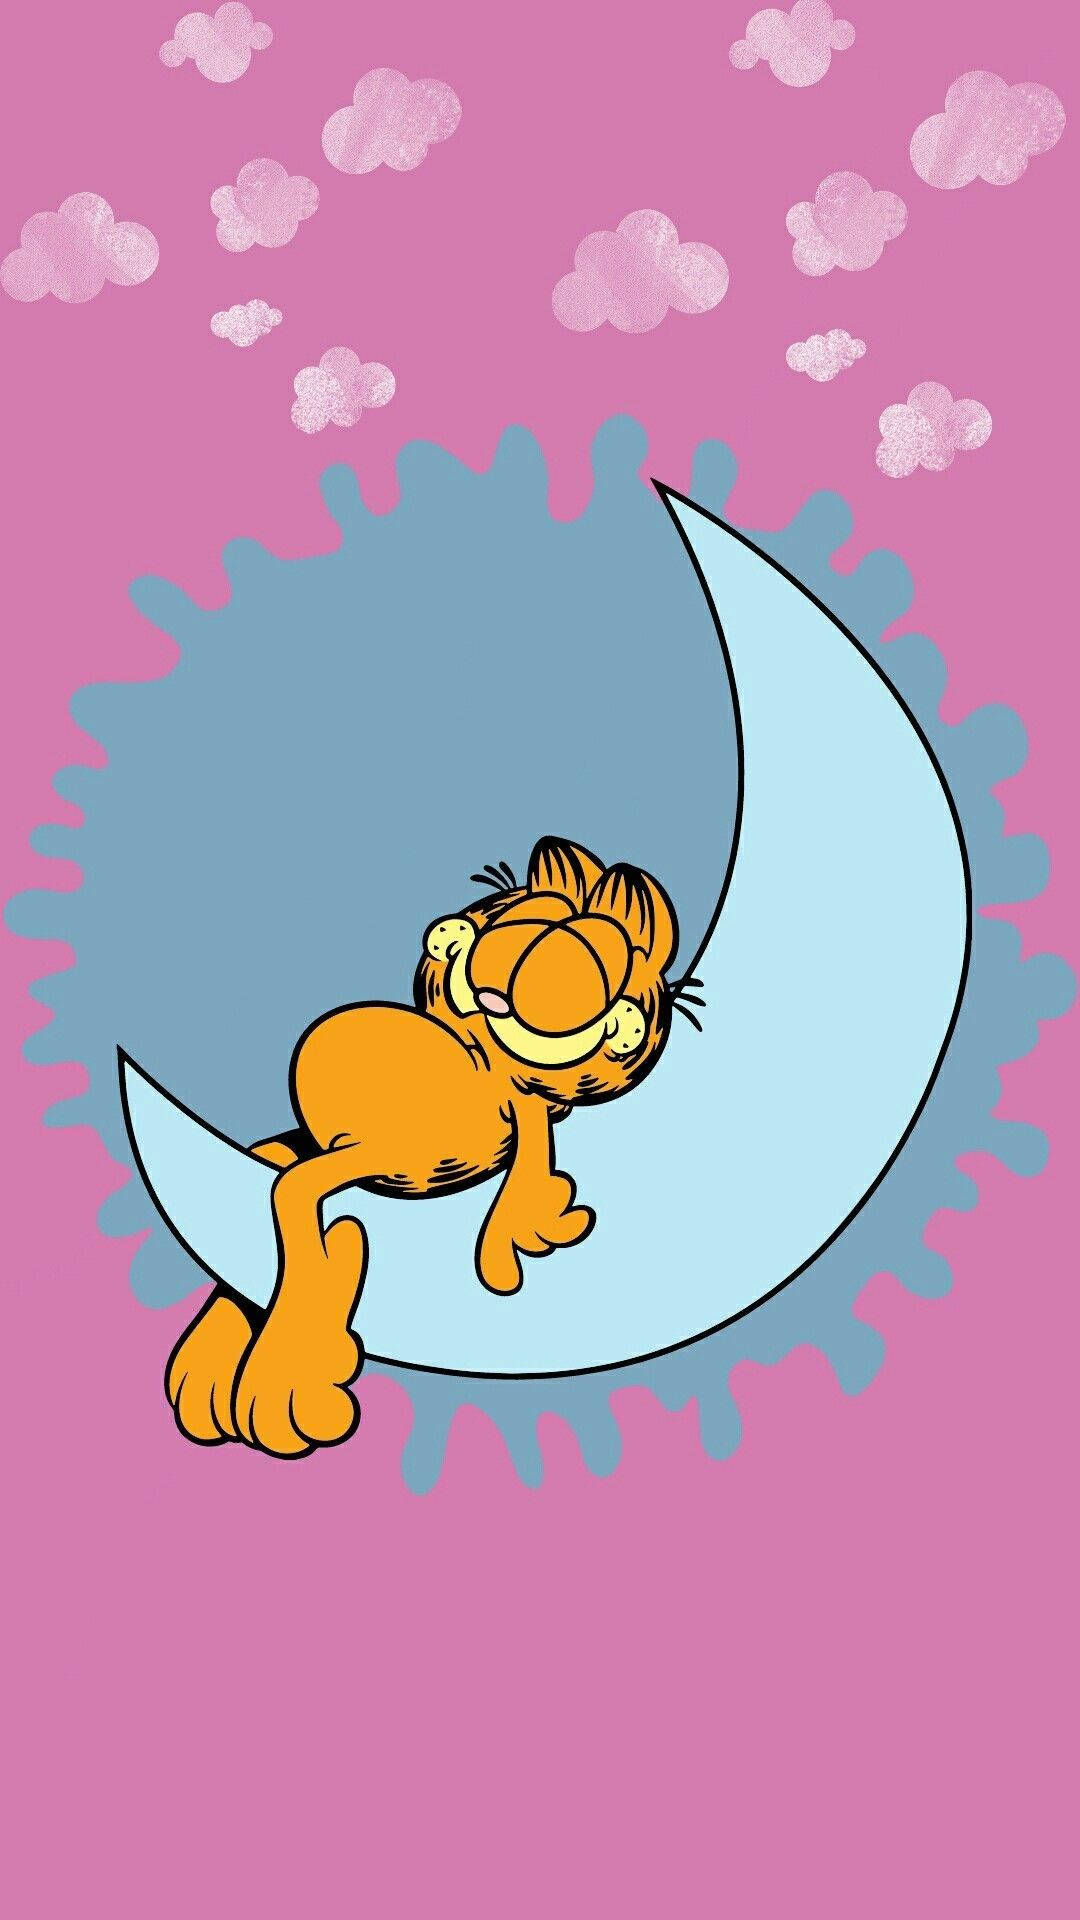 Garfield Sleeping On The Moon Wallpaper